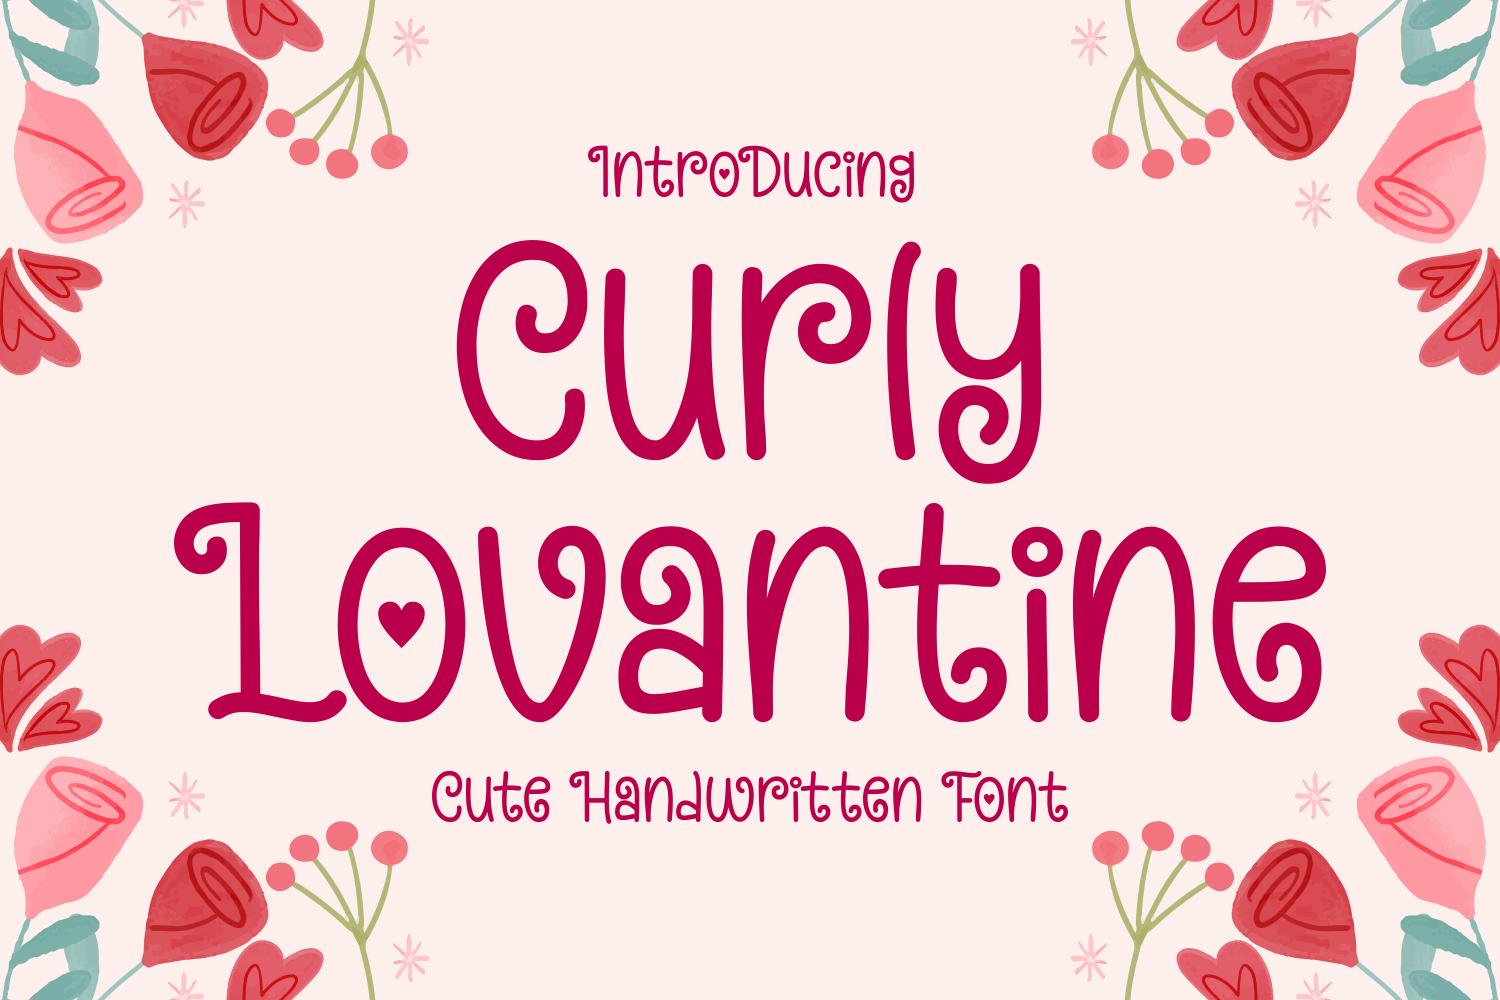 Curly Lovantine Font